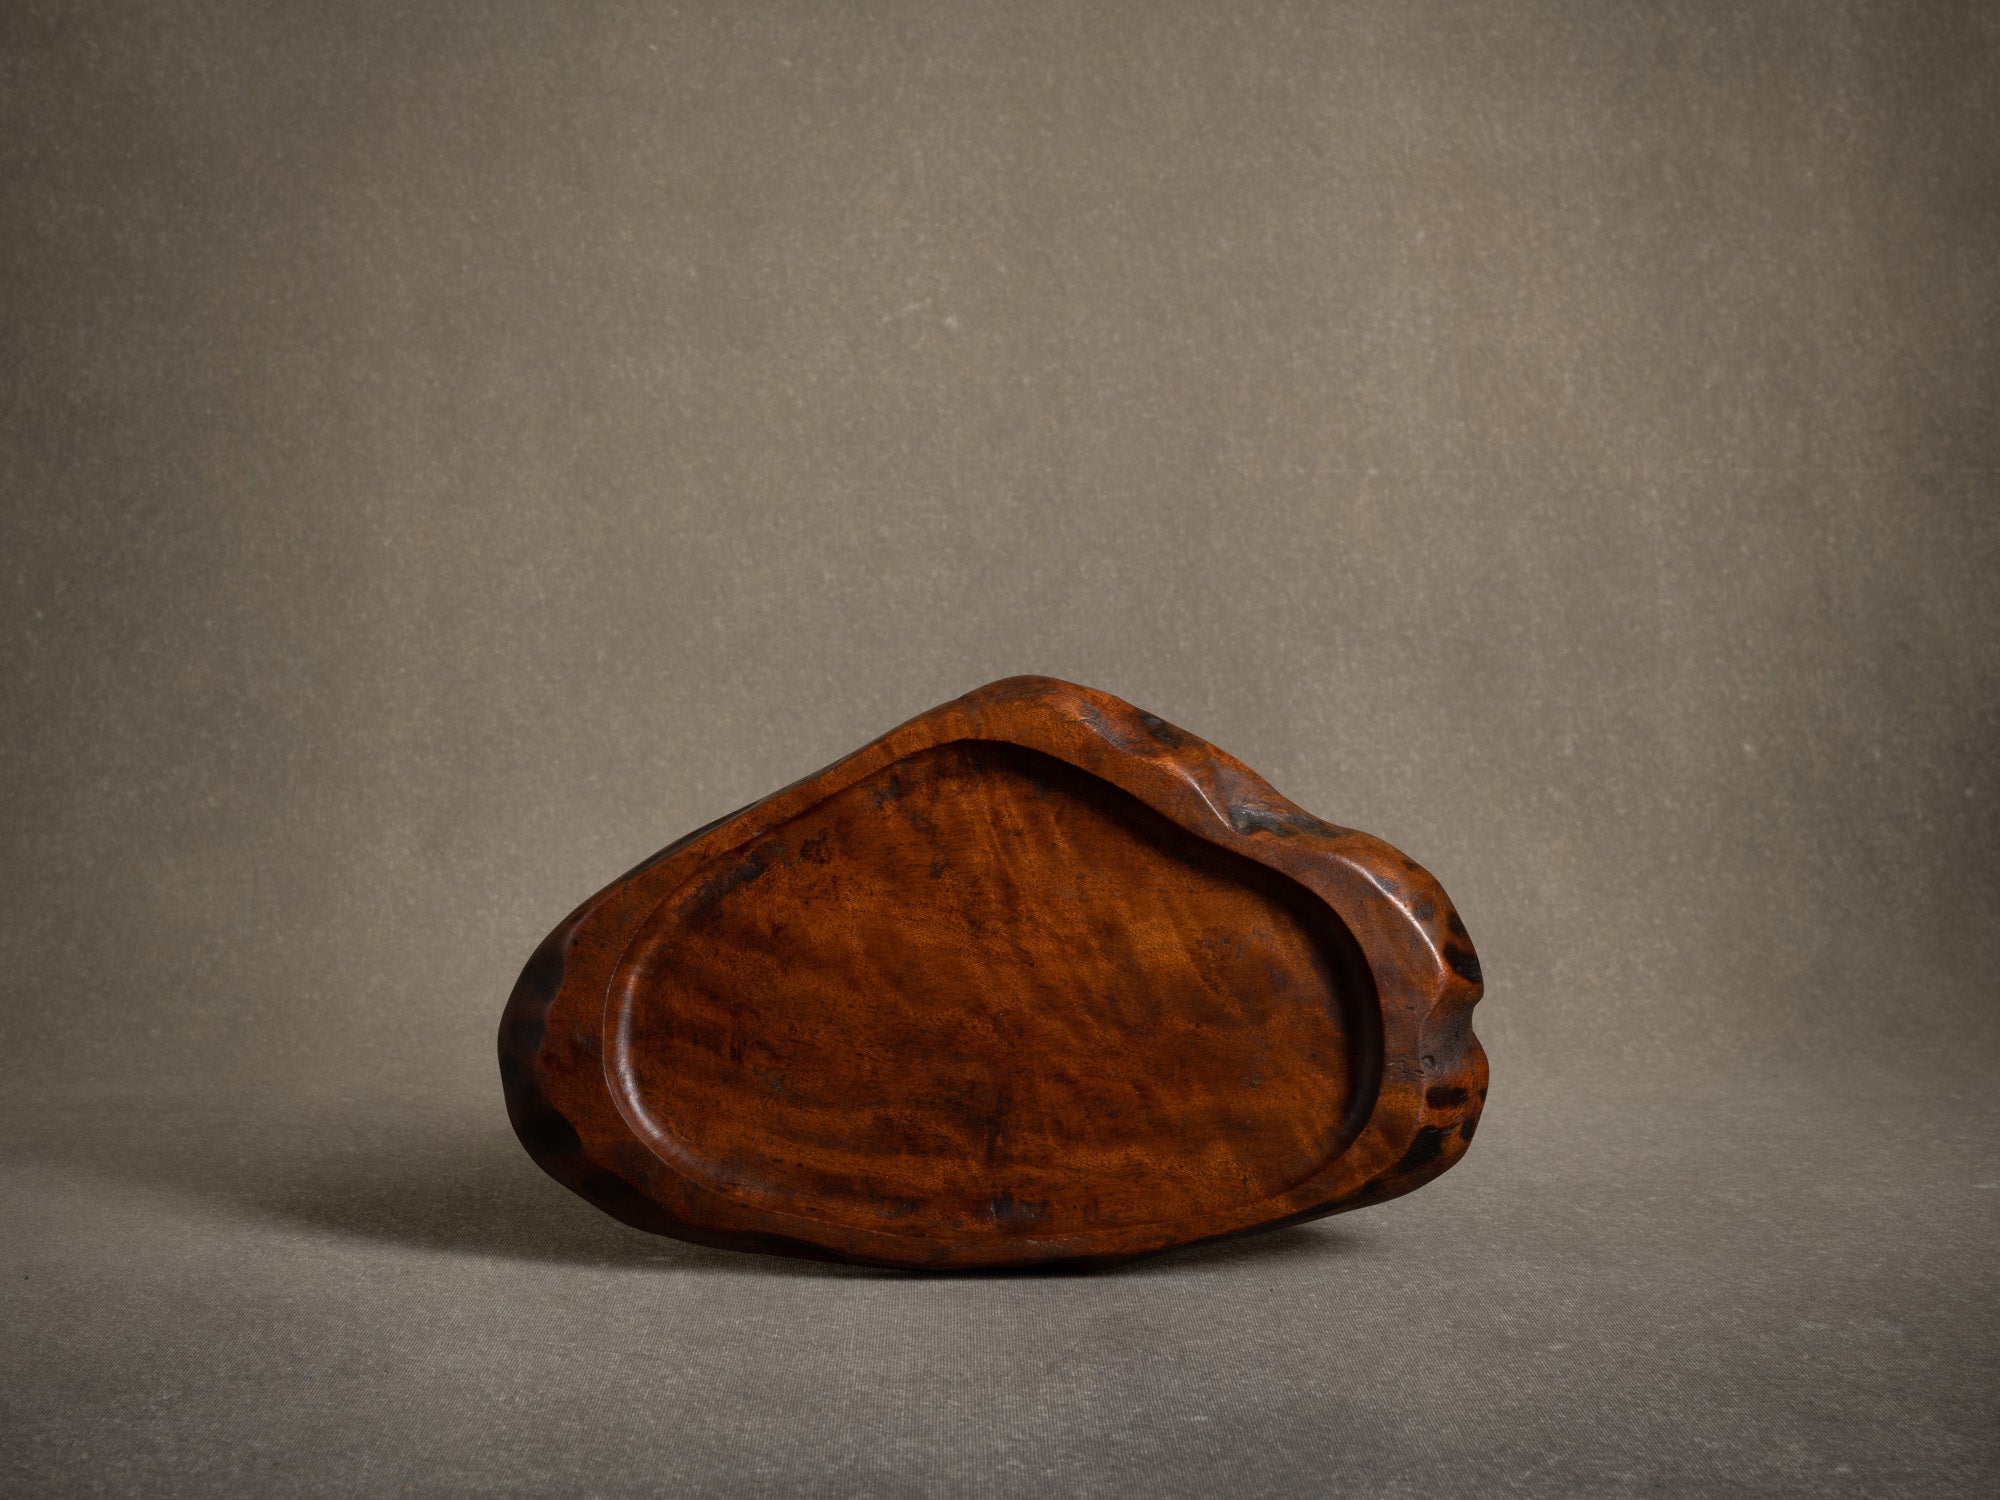 Ancien plateau mingei monoxyle senchabon en bois de zelkova, Japon (vers 1920)..Mingei Senchabon free form monoxyle tray in keyaki zelkova wood, Japan, Japan (circa 1920)